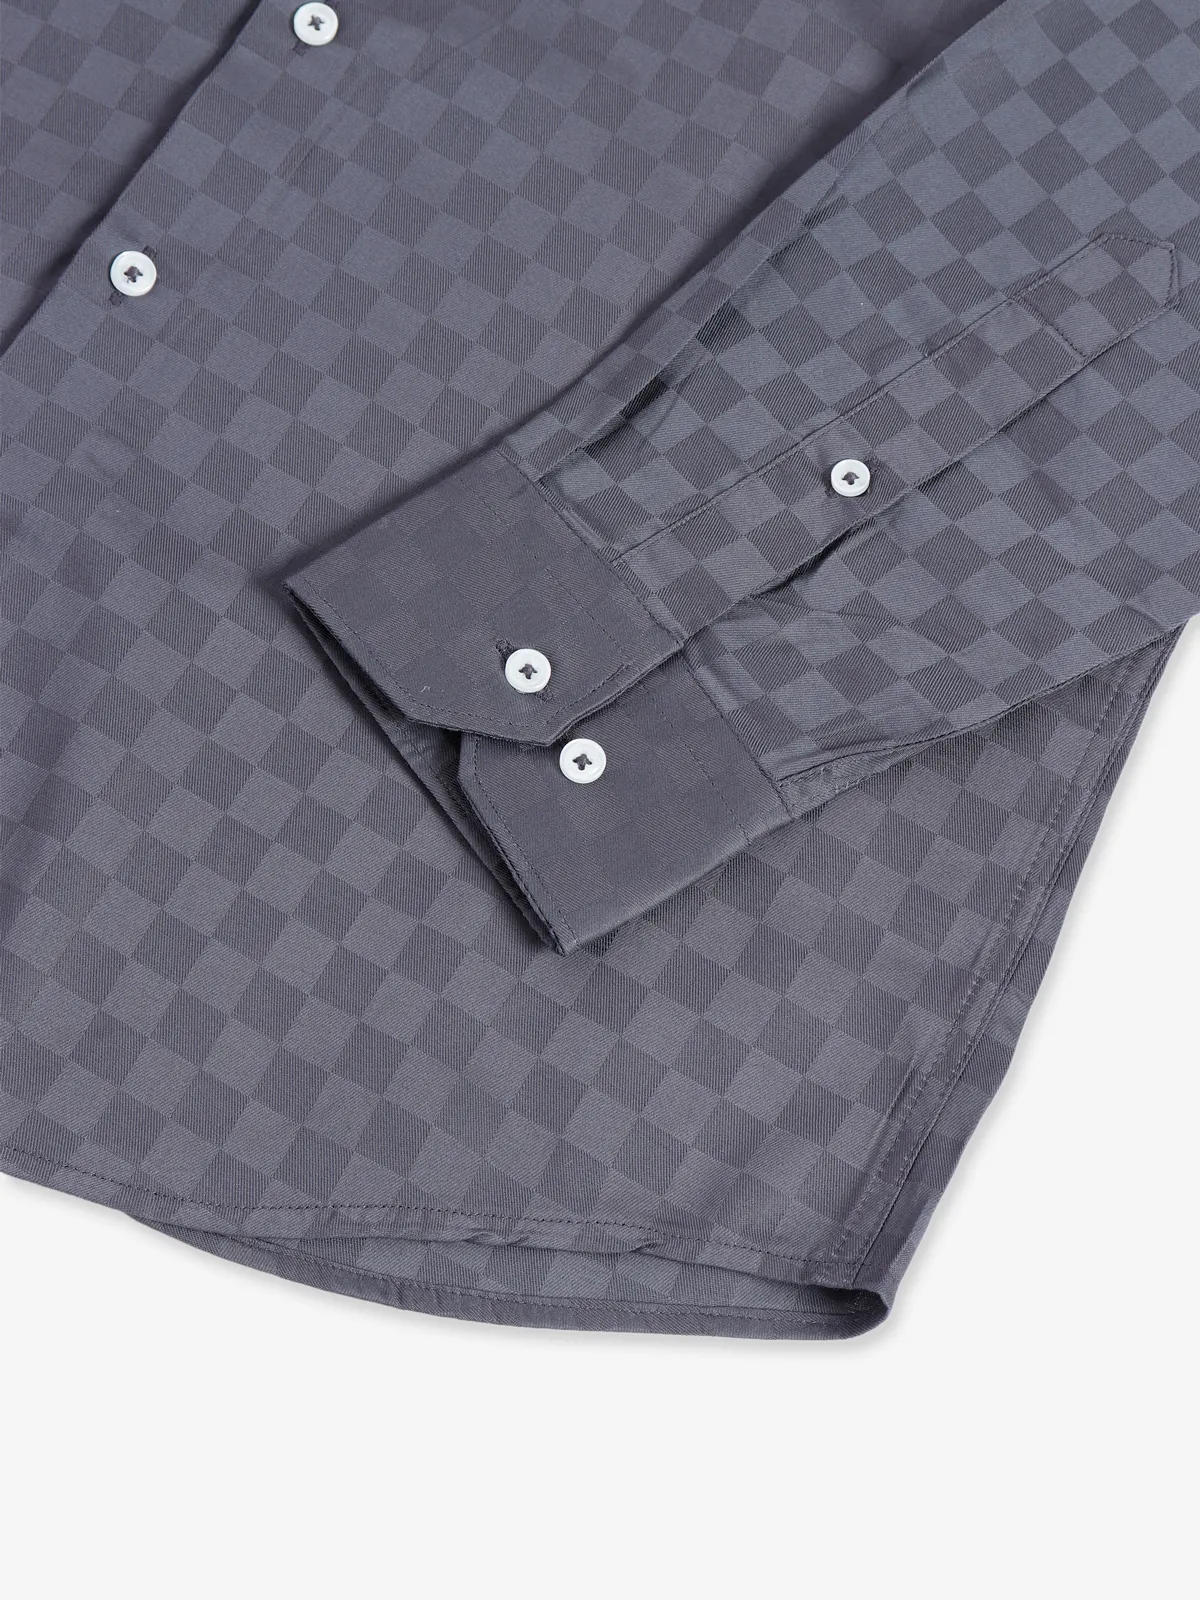 Van Heusen cotton grey full sleeves shirt